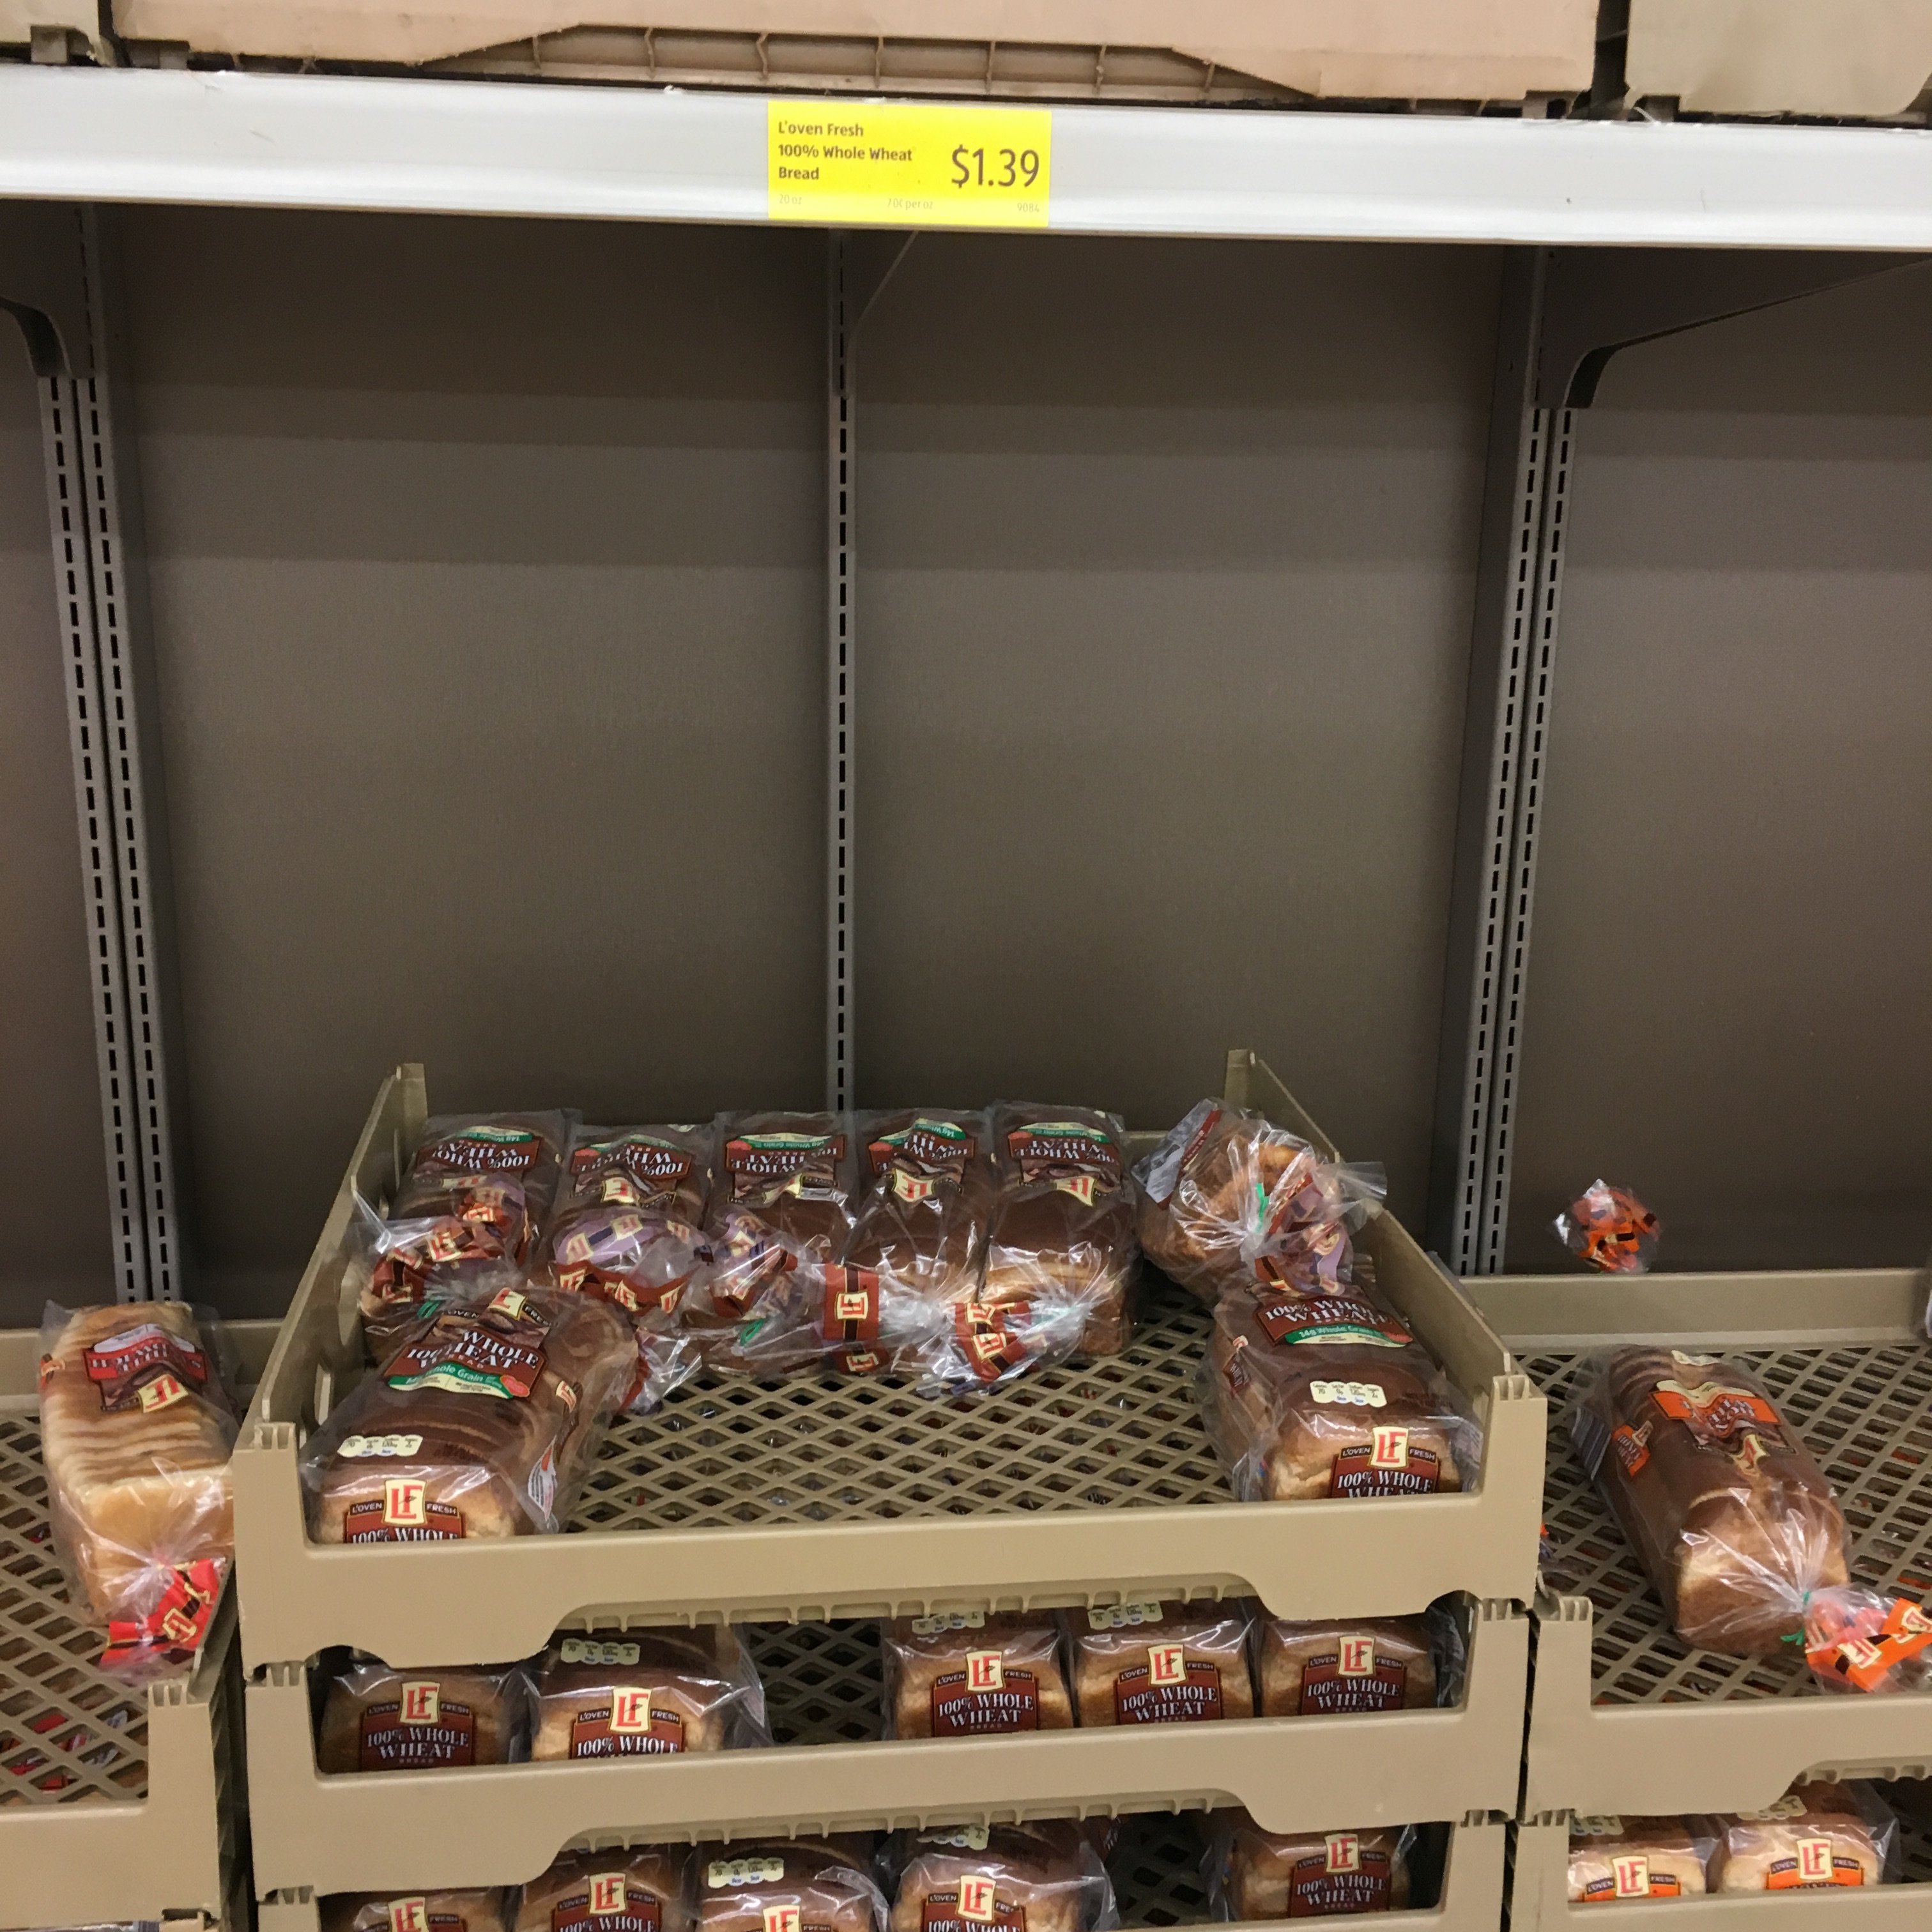 buying bread at aldi